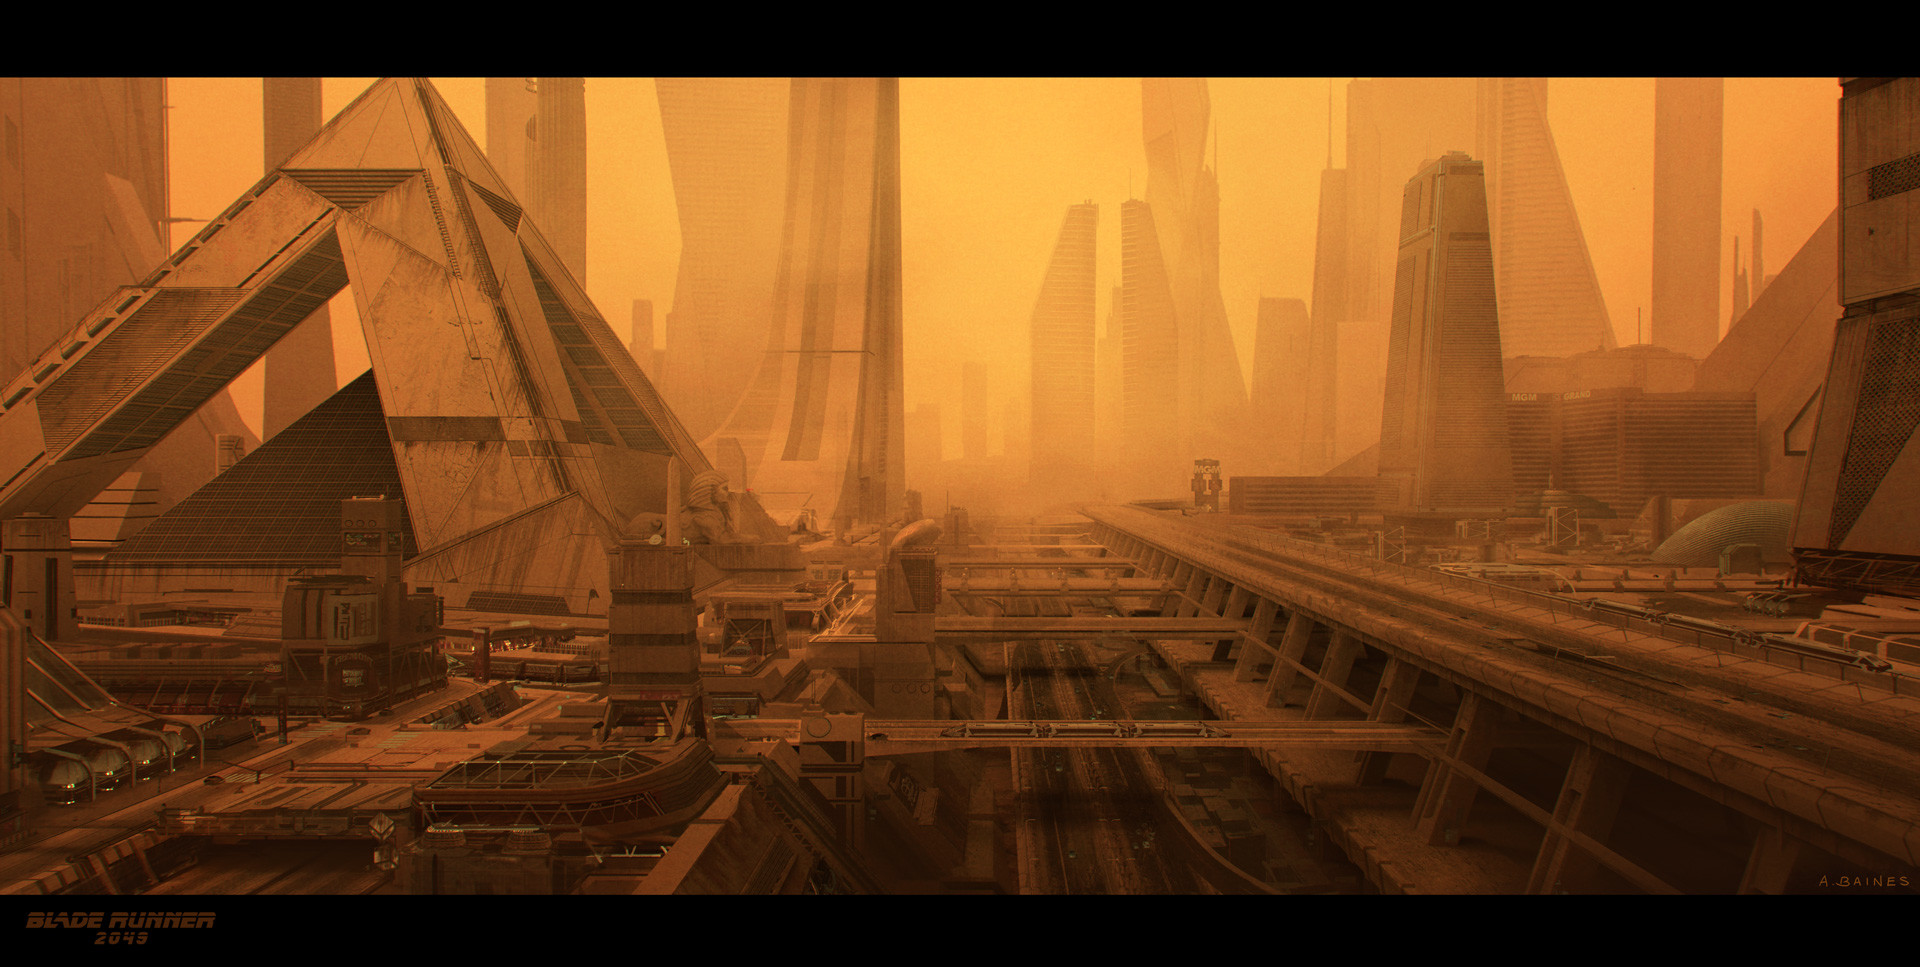 General 1920x967 Blade Runner Blade Runner 2049 movies artwork pyramid futuristic futuristic city sphinx industrial